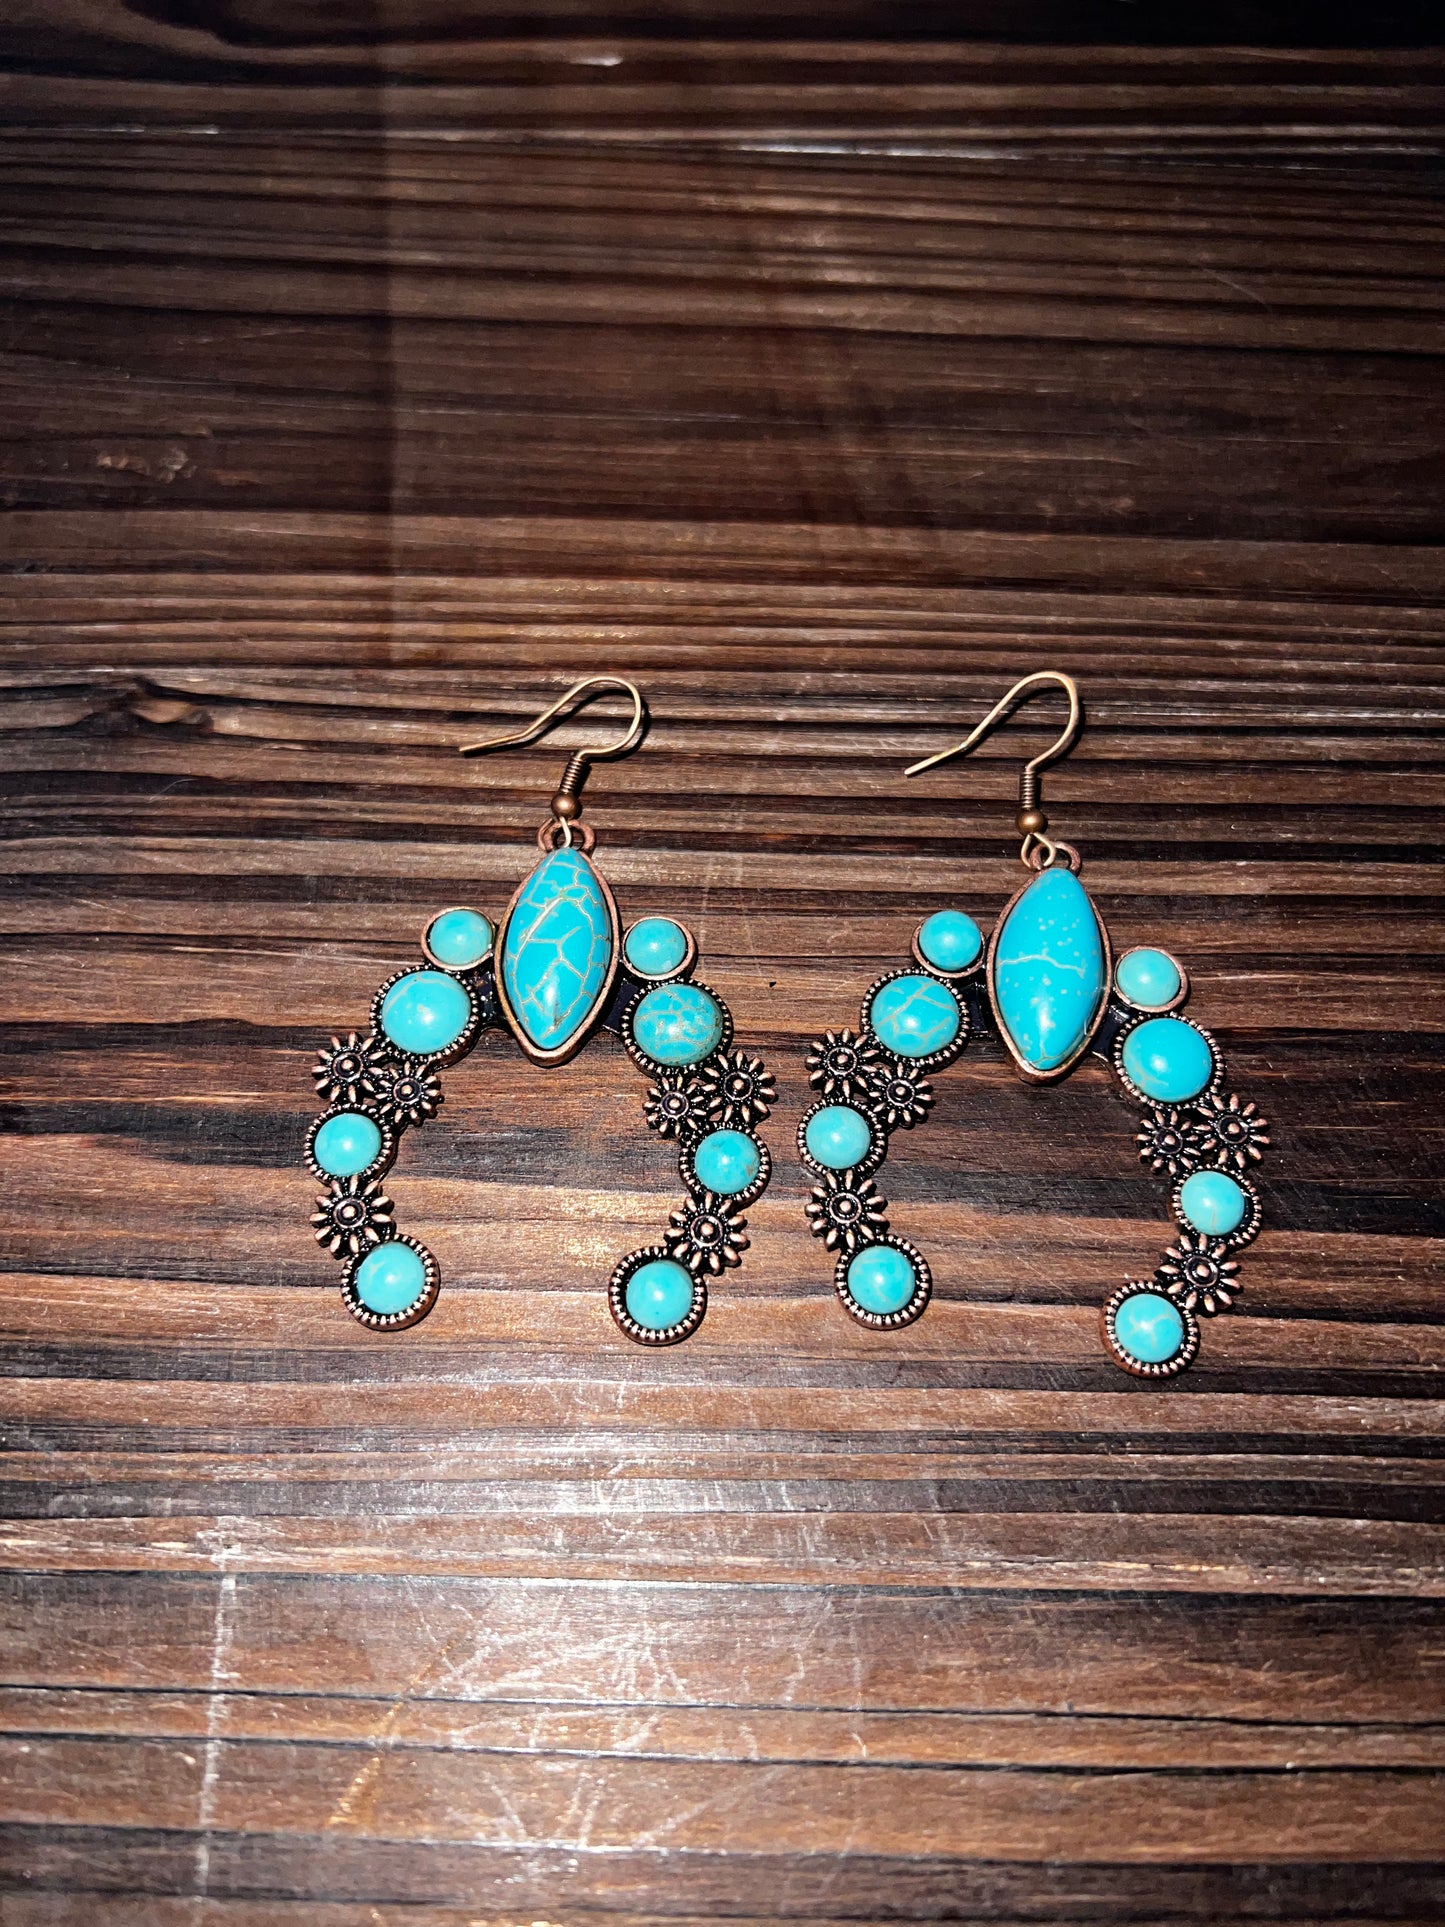 Western turquoise earrings